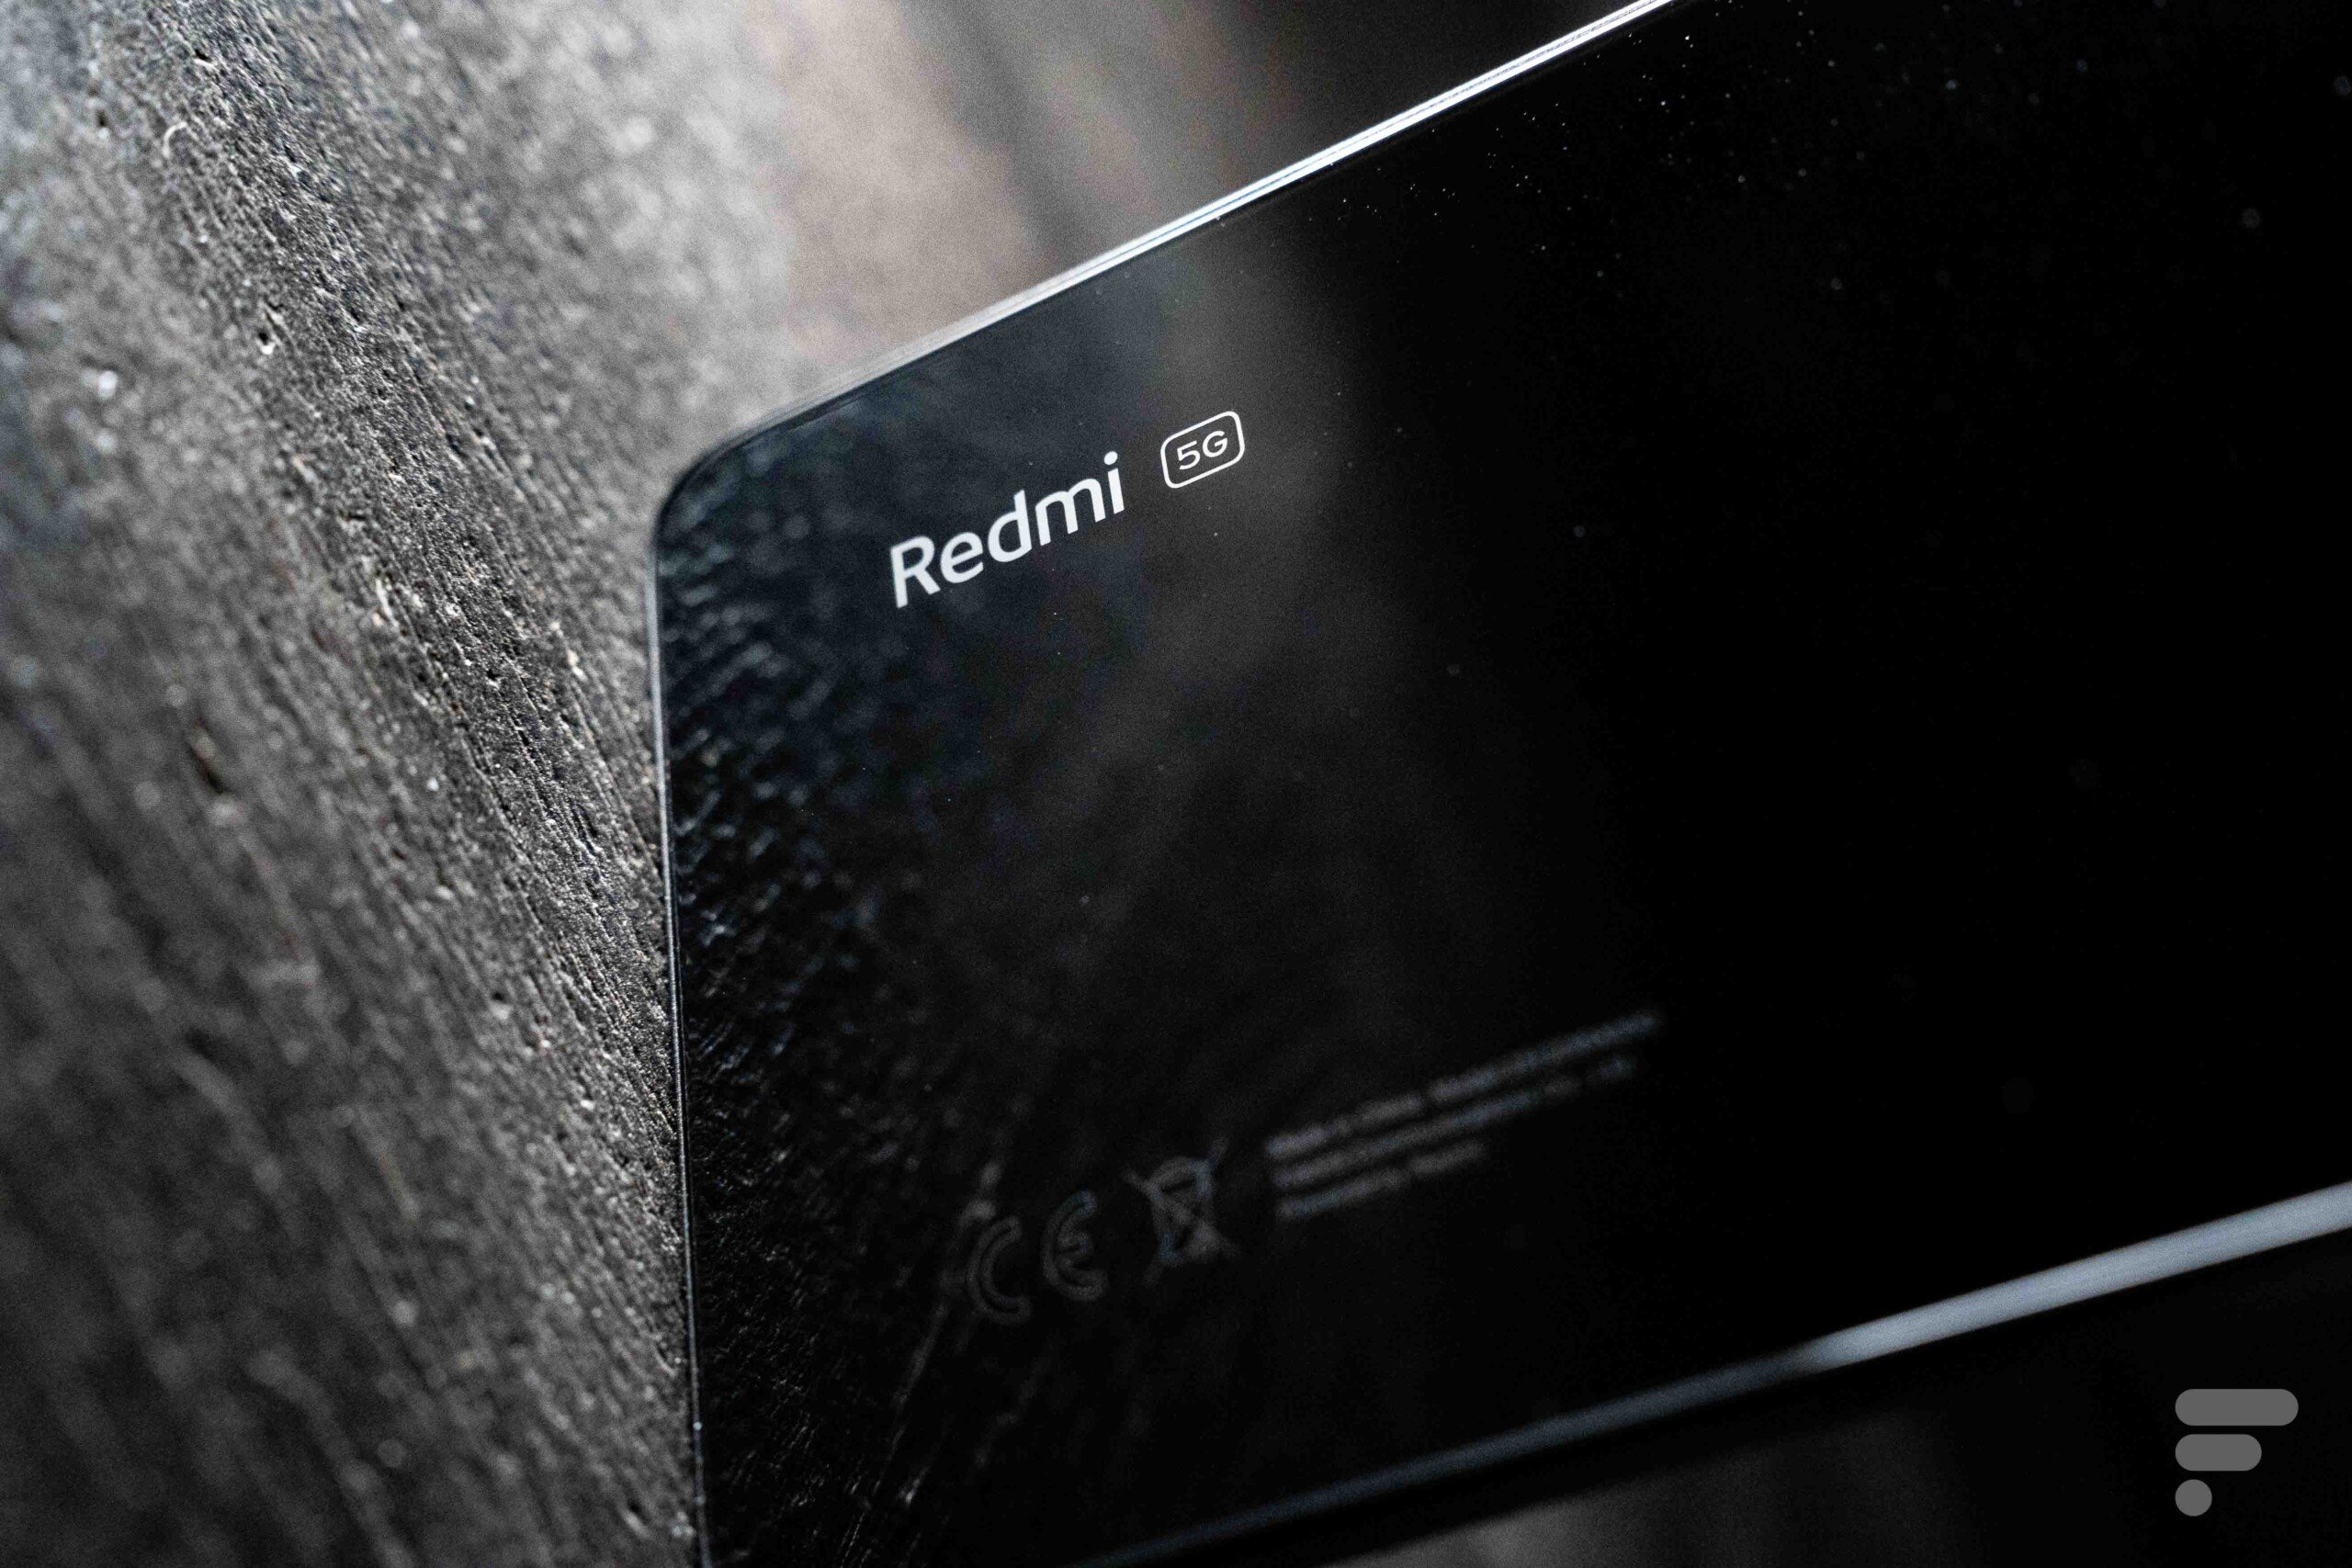 Redmi Note 13 Pro 5G bleu 256Go - Xiaomi - RED by SFR